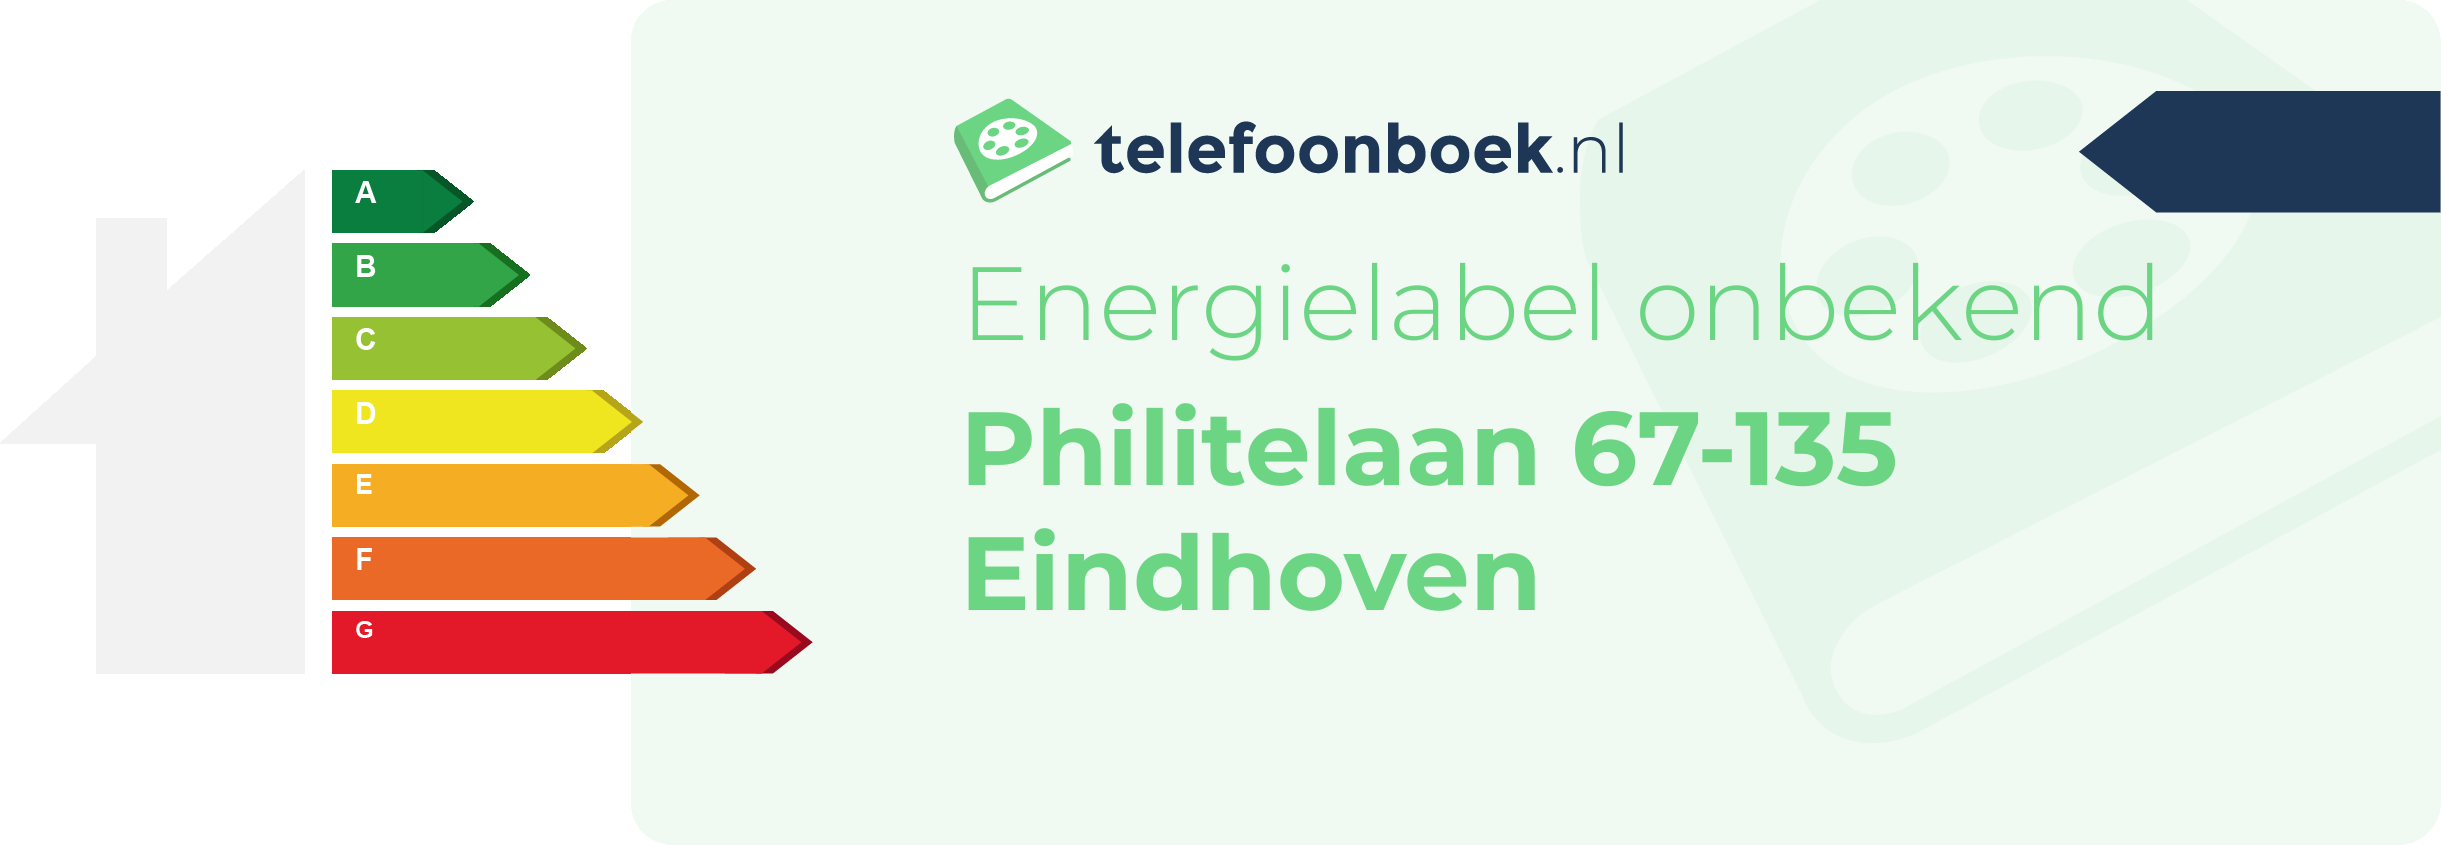 Energielabel Philitelaan 67-135 Eindhoven